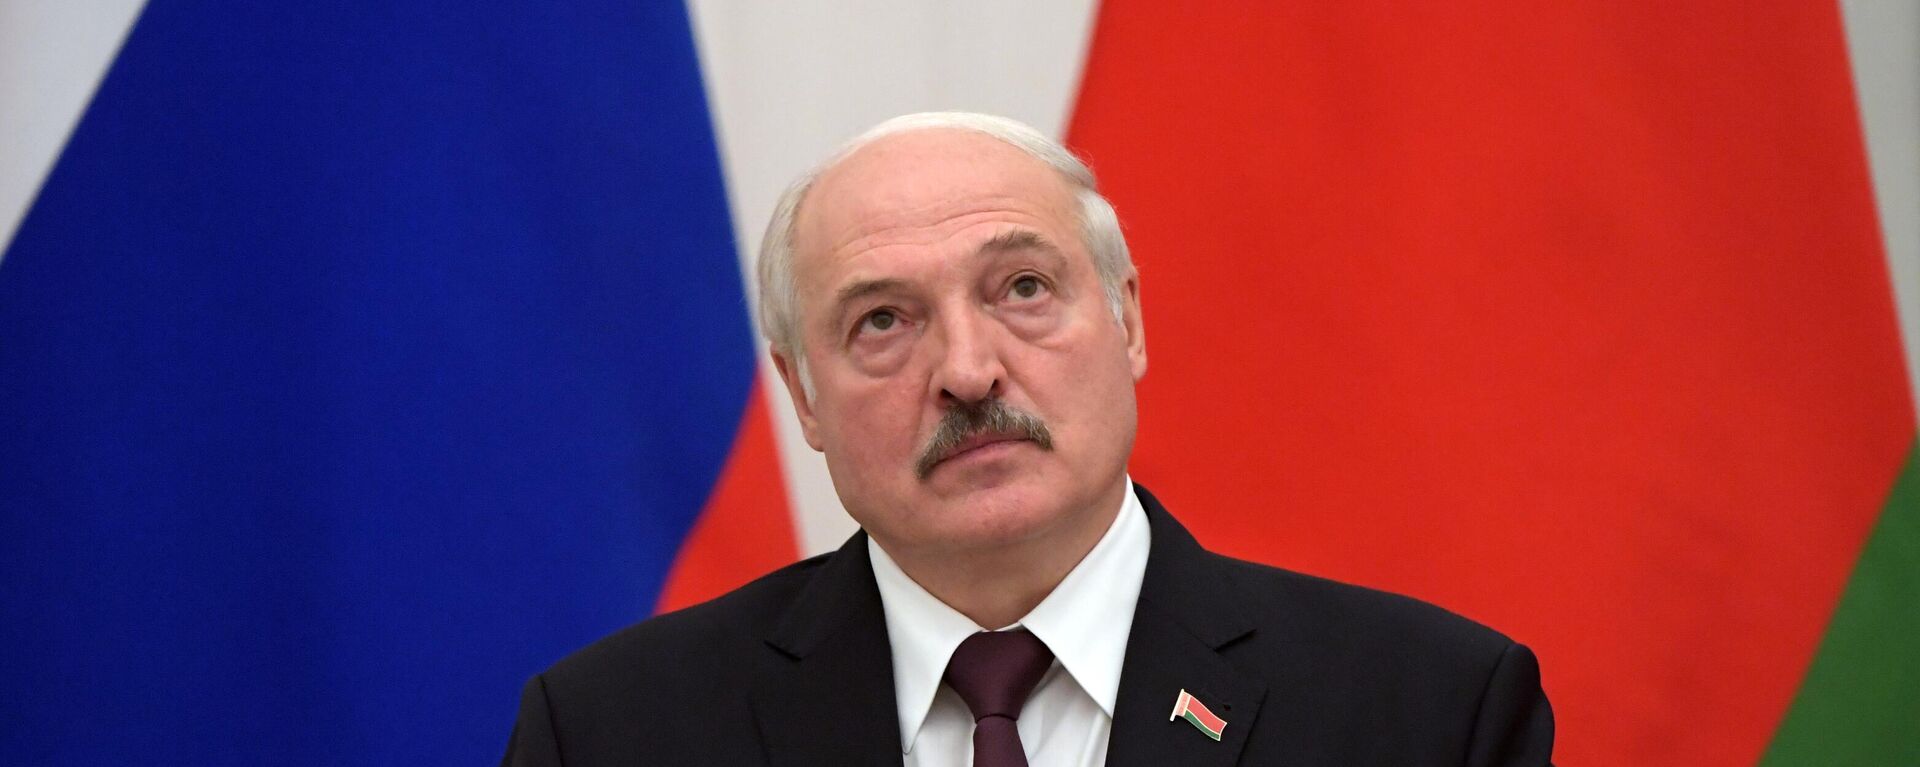 Президент Белоруссии Александр Лукашенко - Sputnik Литва, 1920, 12.09.2021